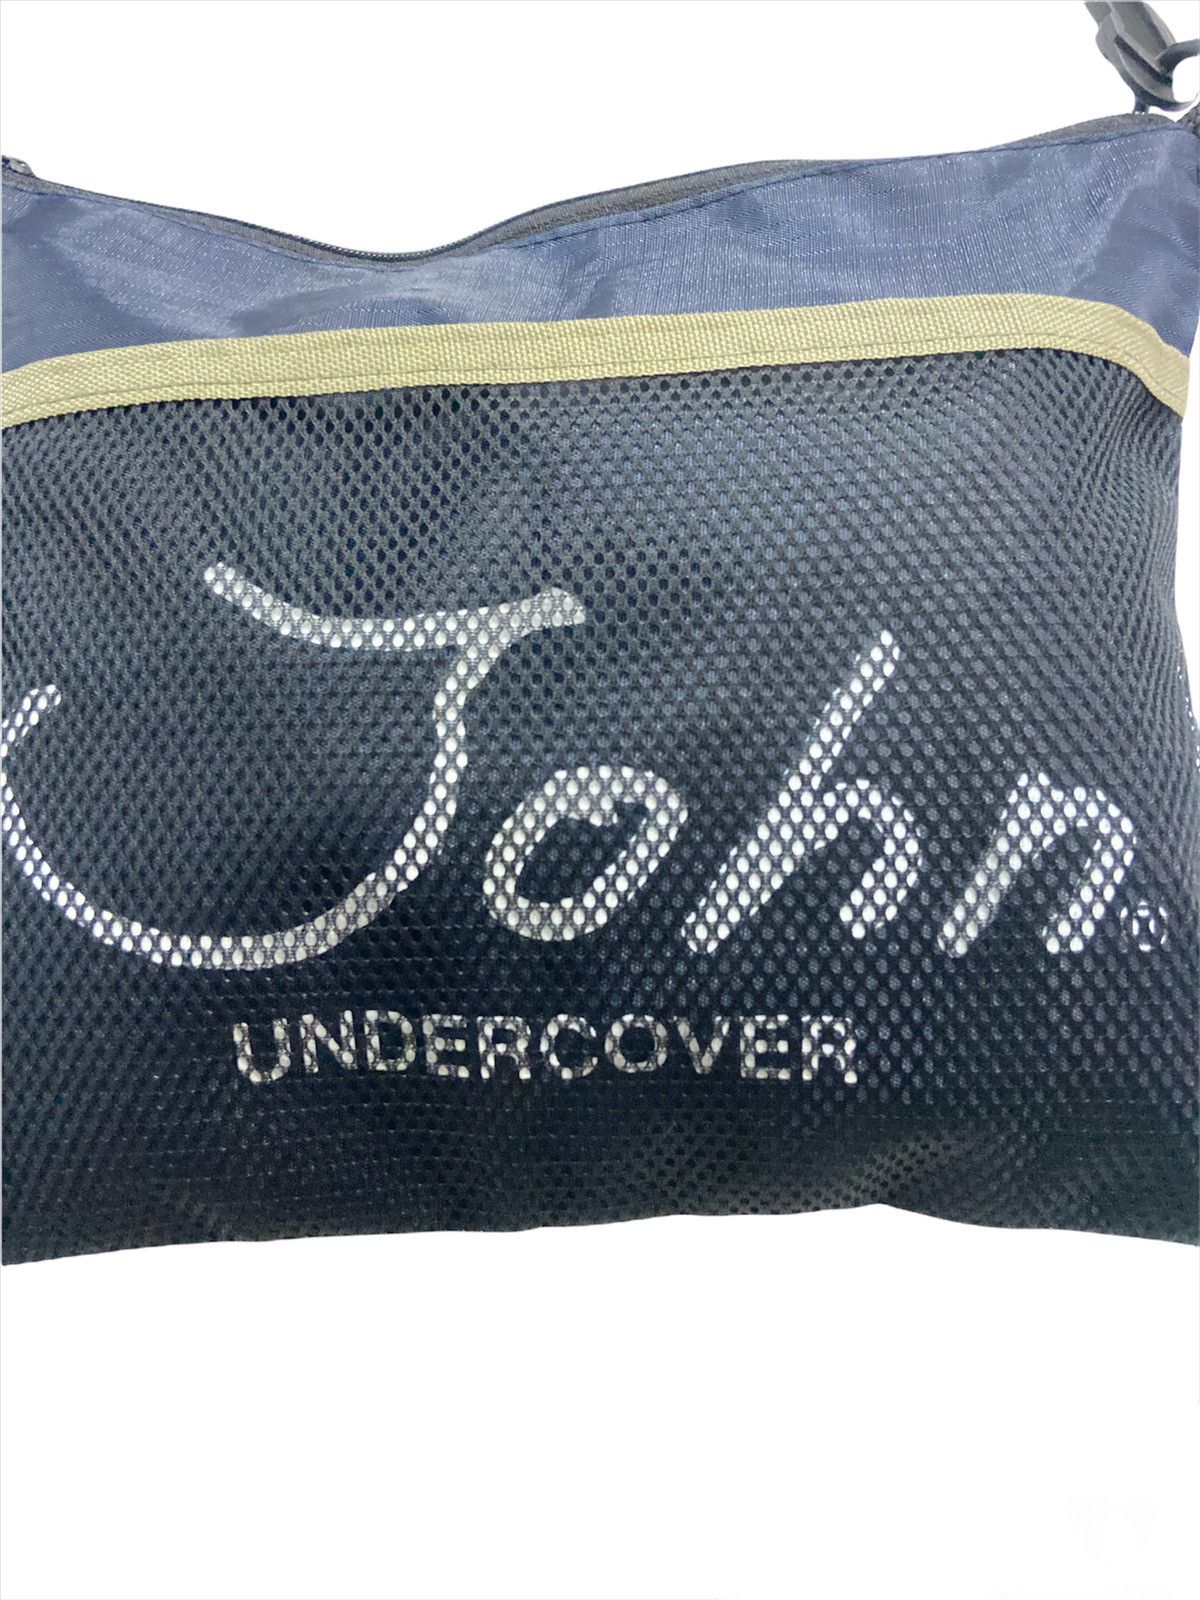 John Undercover by Jun Takahashi Sling Bag - 3